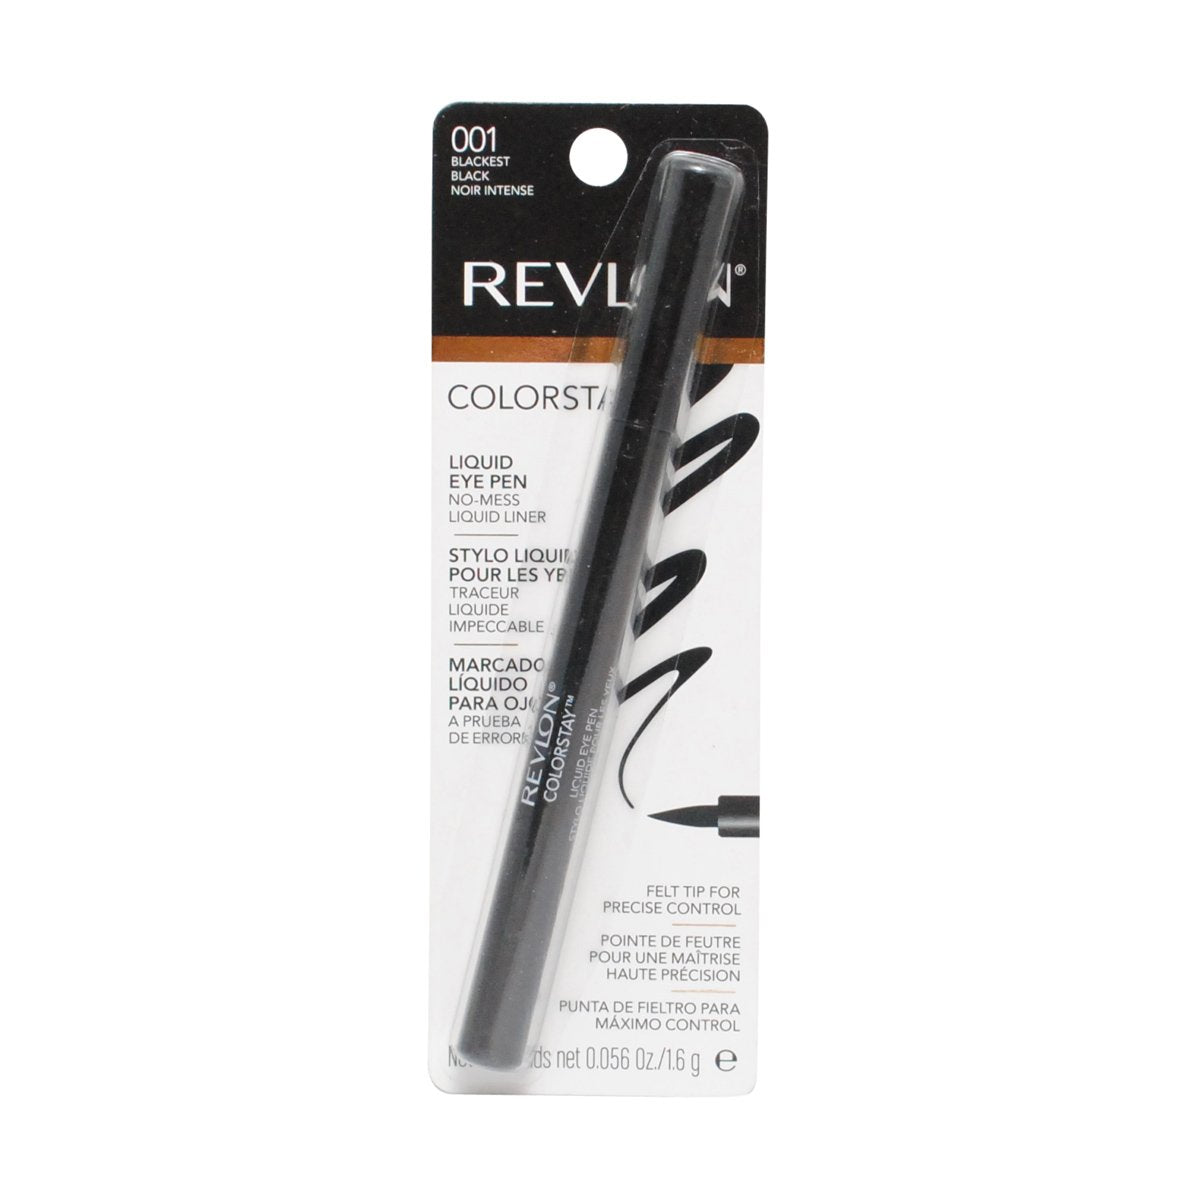 Revlon Colorstay Liquid Eye Pen - Black (001)